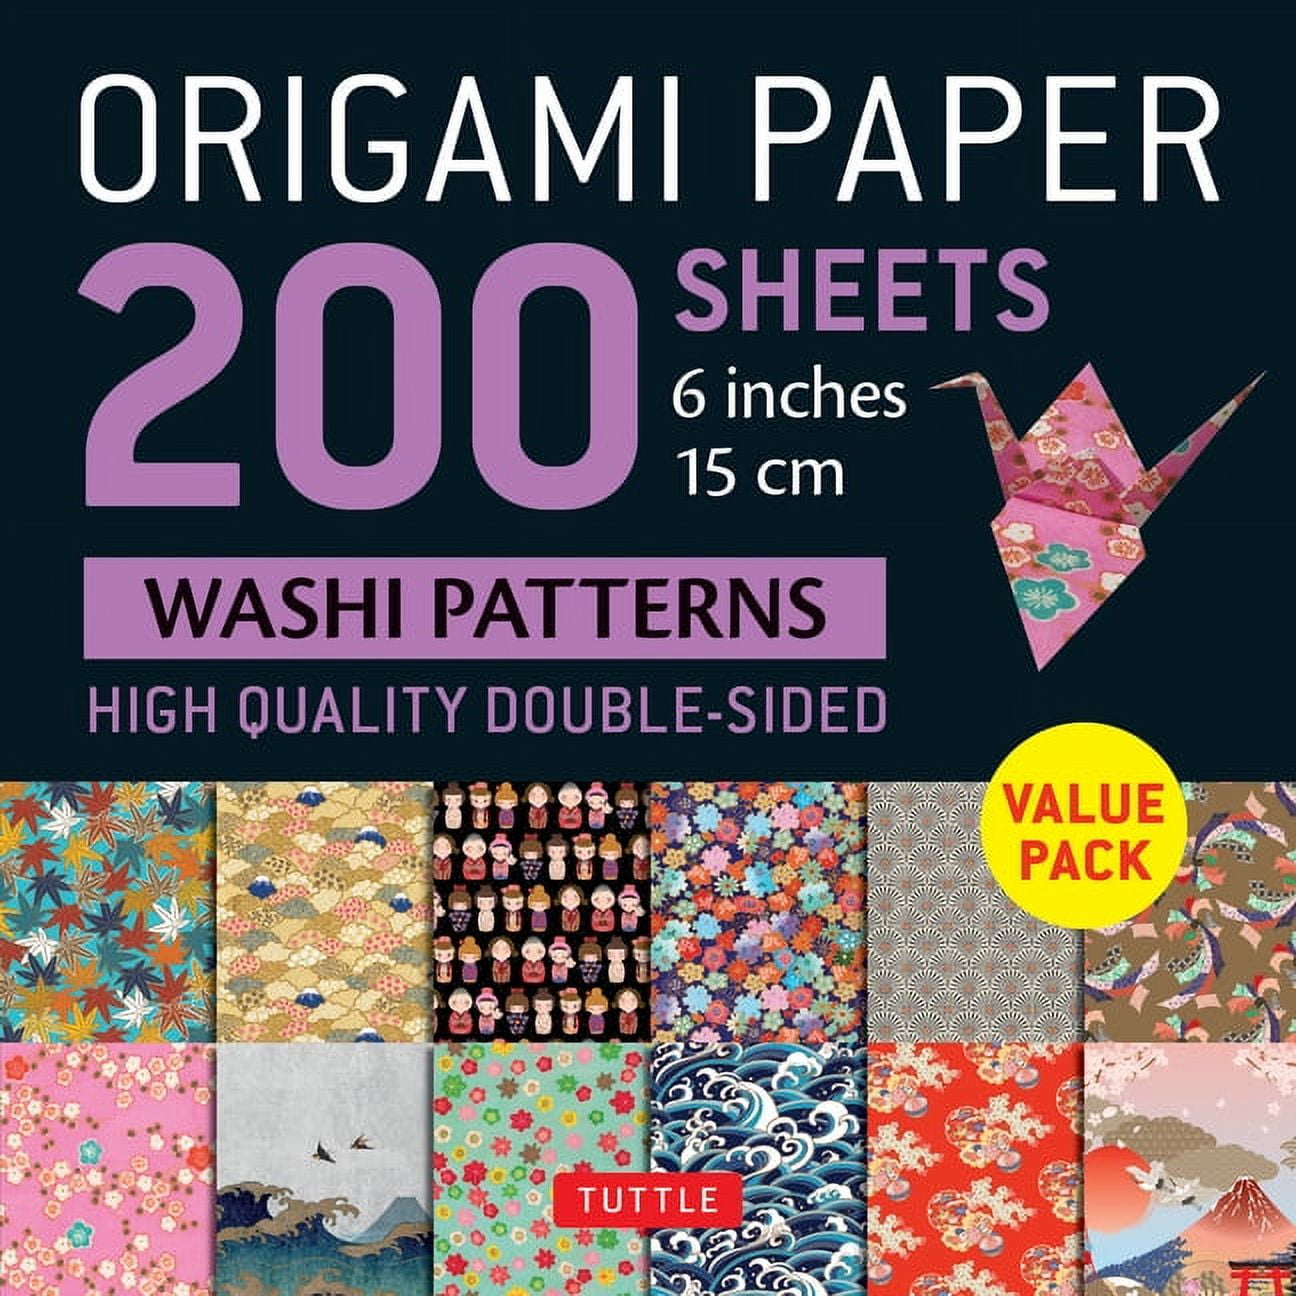 Origami Paper 200 sheet Japanese Washi Patterns 6 3/4 17 cm (9780804852395)